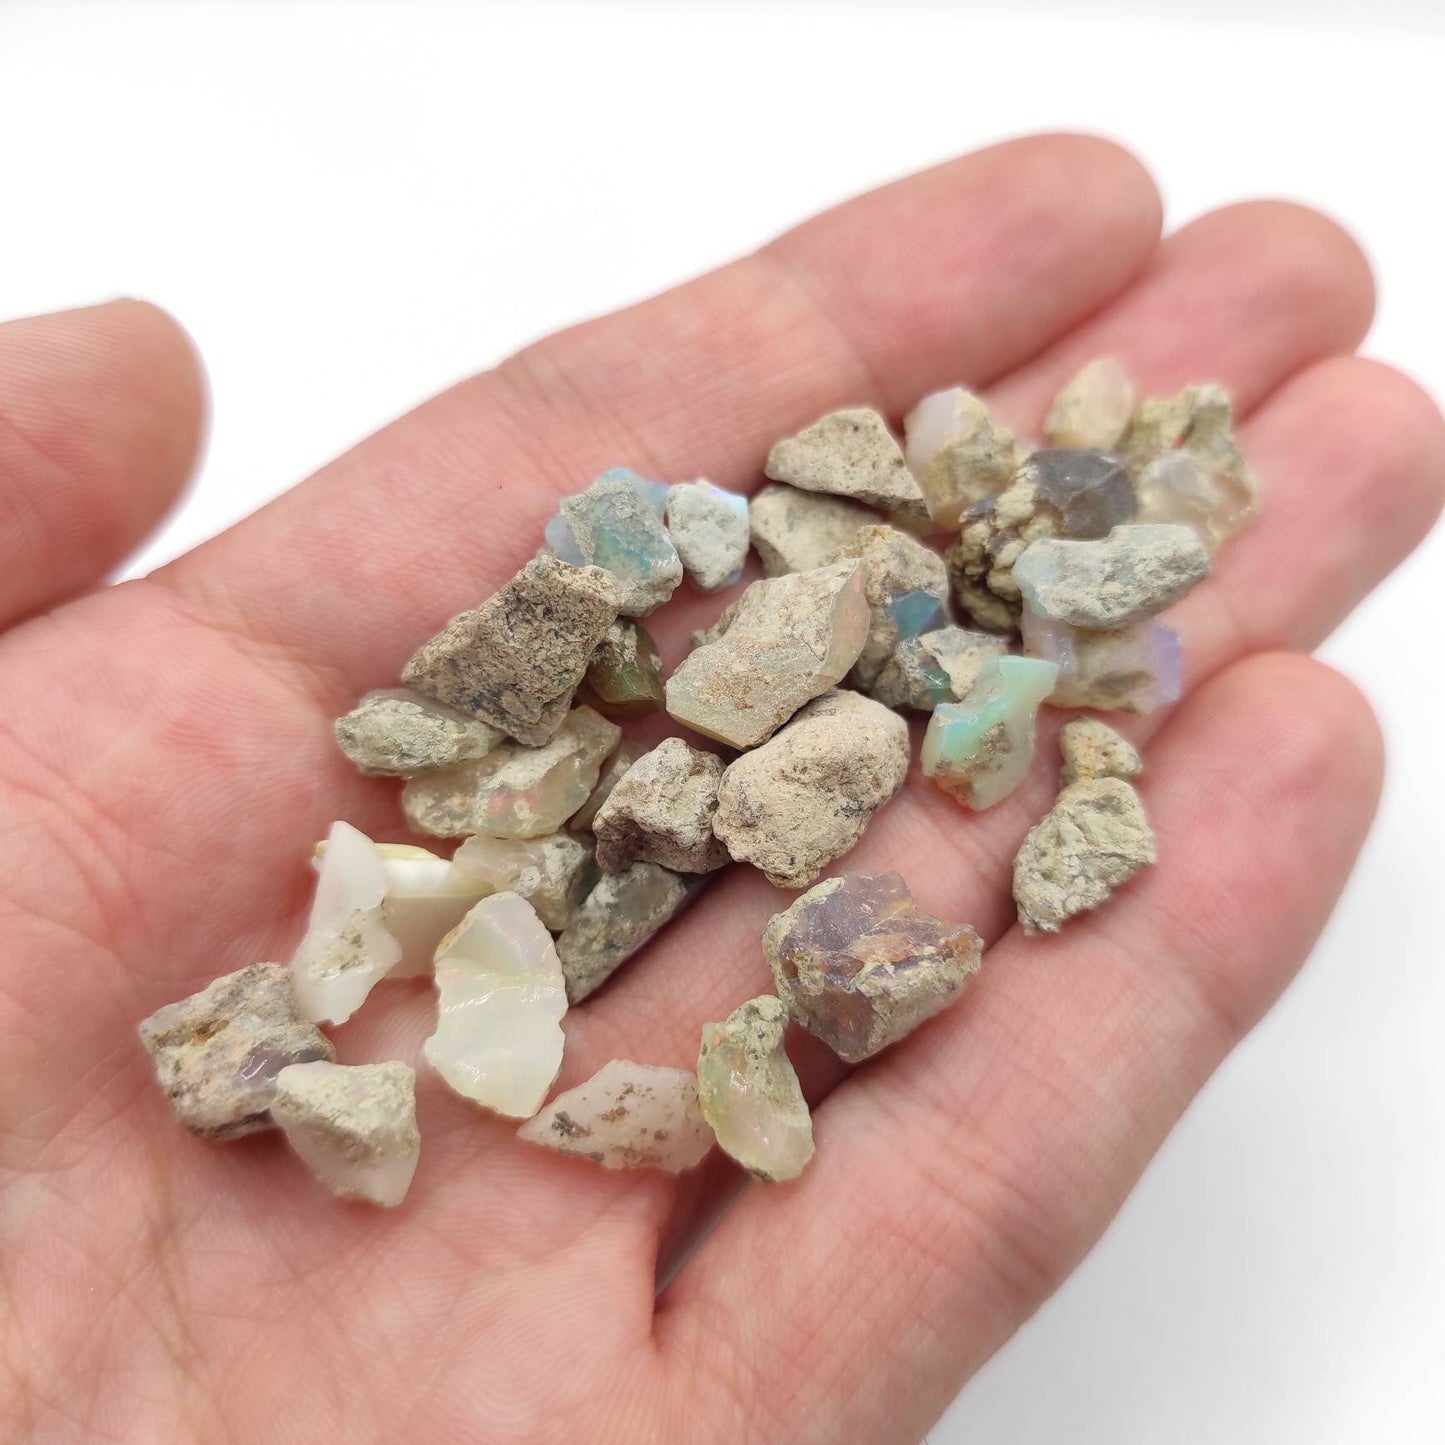 63.90ct Rough Opal Lot - Ethiopian Opals - Raw Uncut Opals - Natural Opal Gemstone Lot - Loose Gems - Rough Gemstones - Flashy Opal Lot